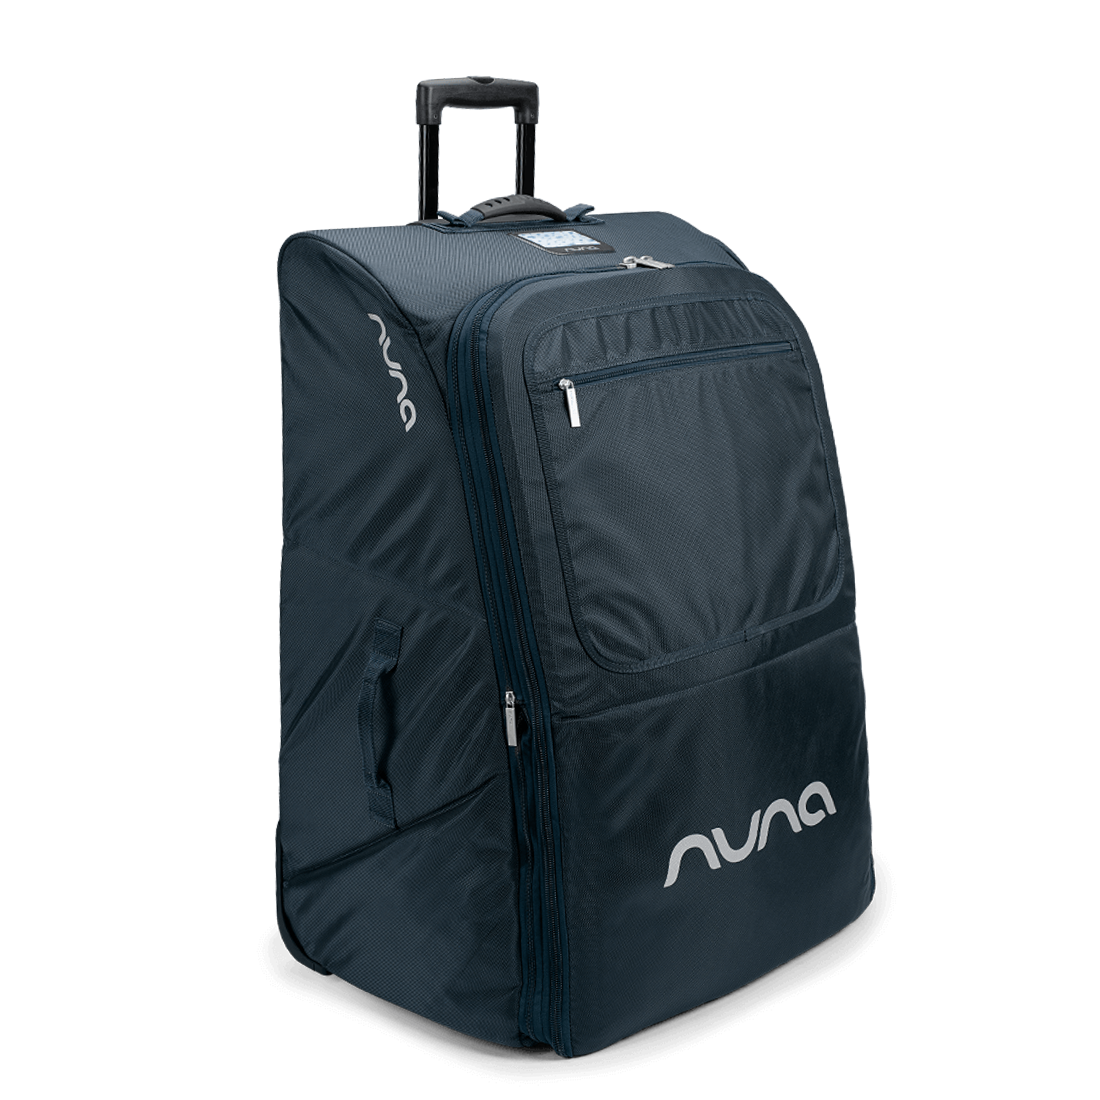 Nuna Wheeled Travel bag